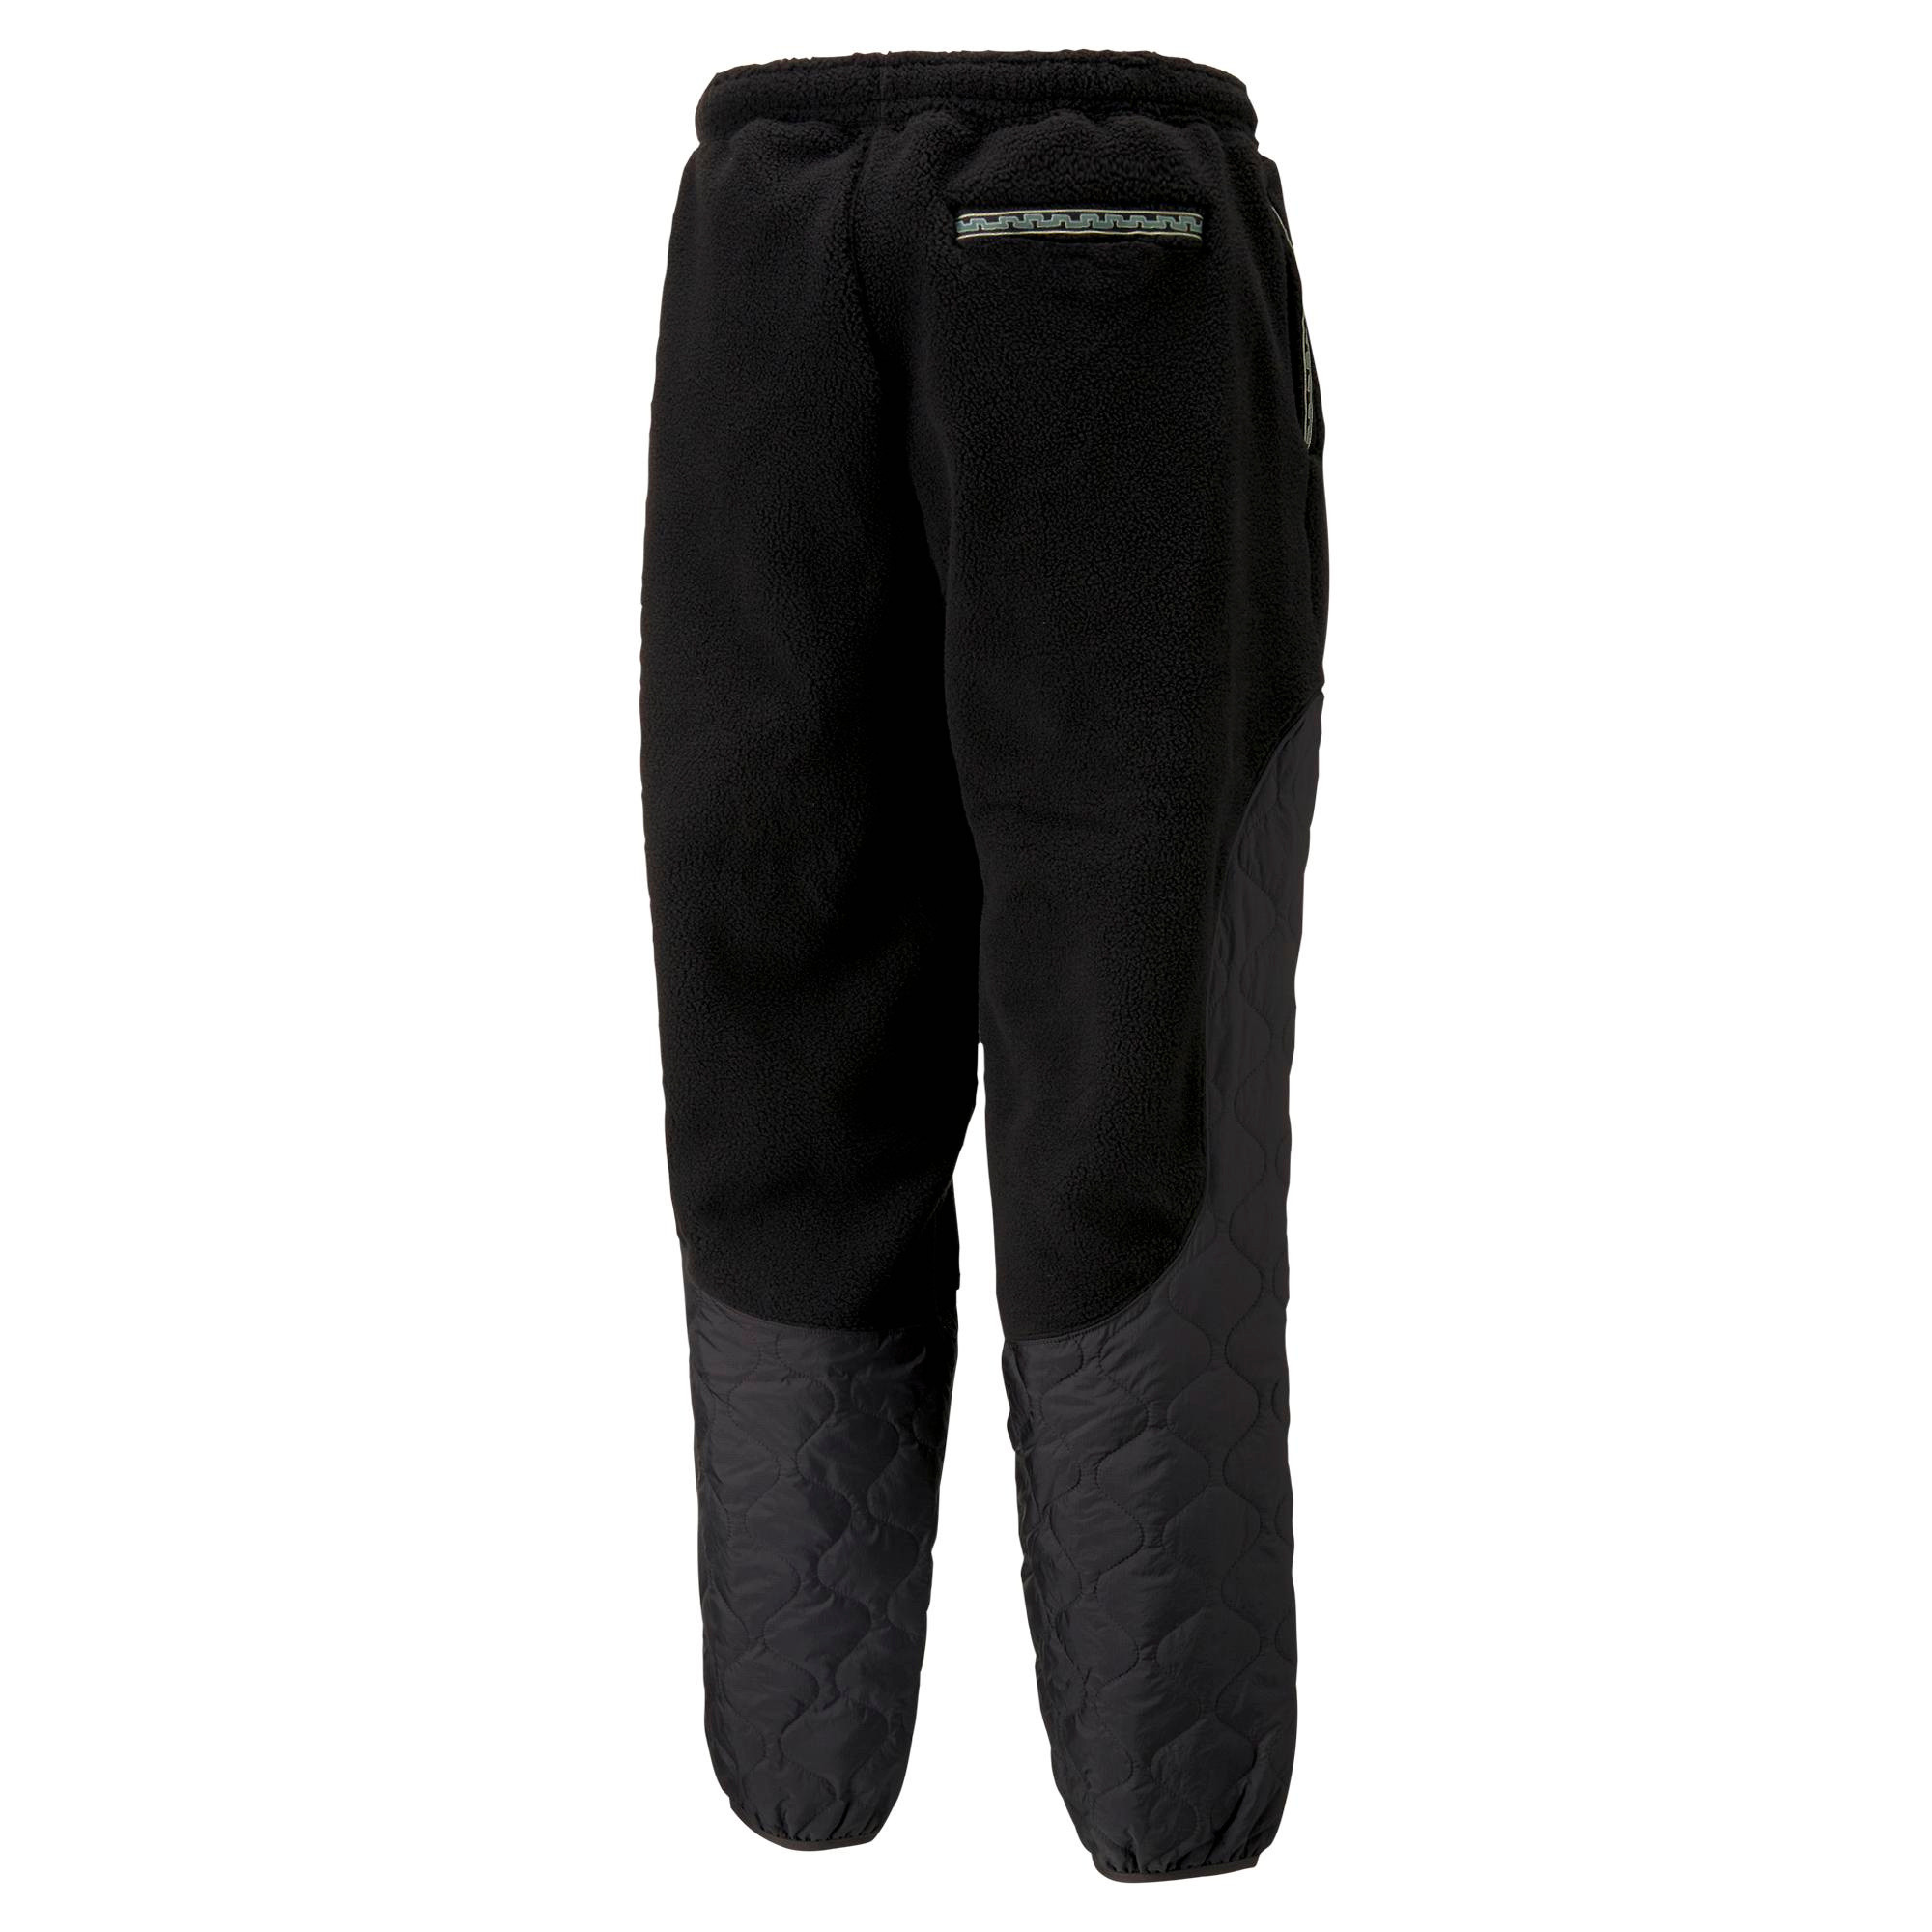 Puma x Market Pants, Black, large image number 1